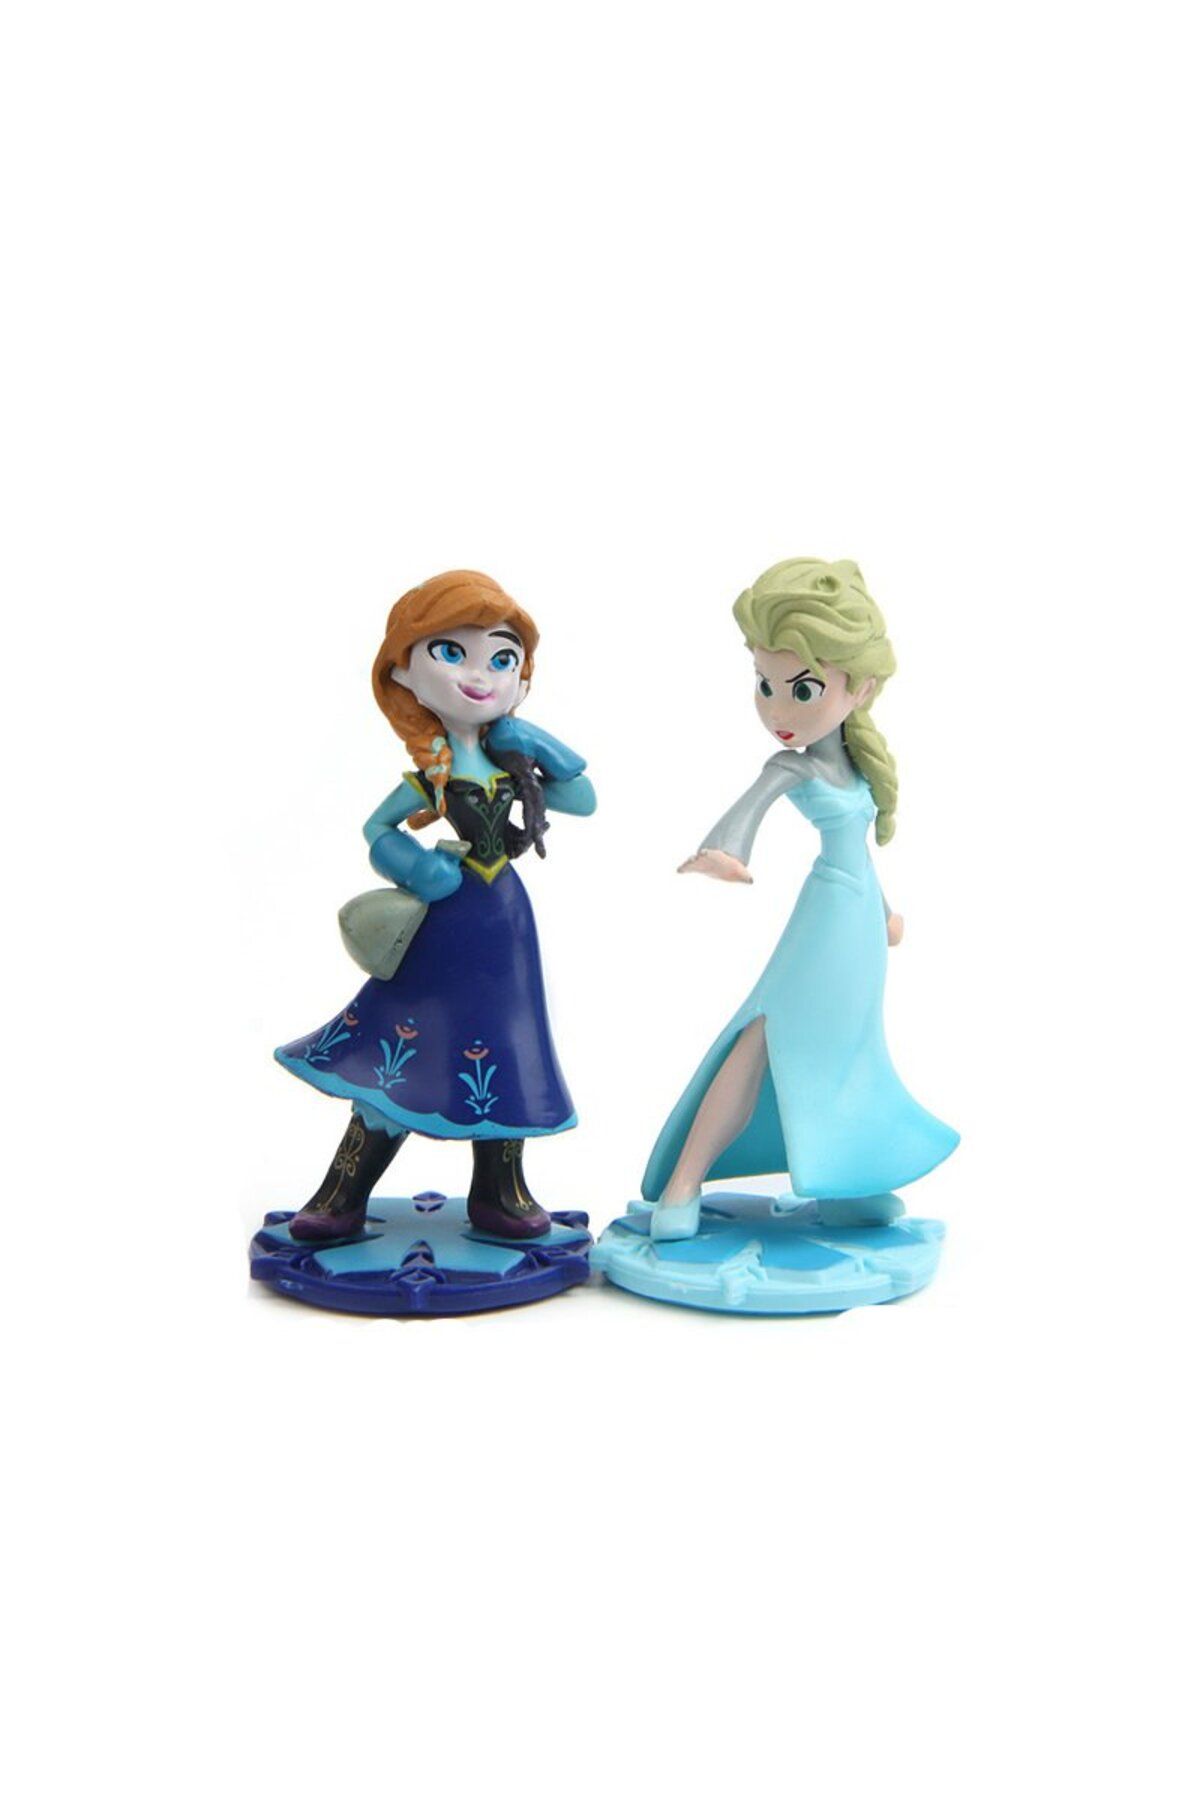 Miniminti Elsa ve Anna Figürü